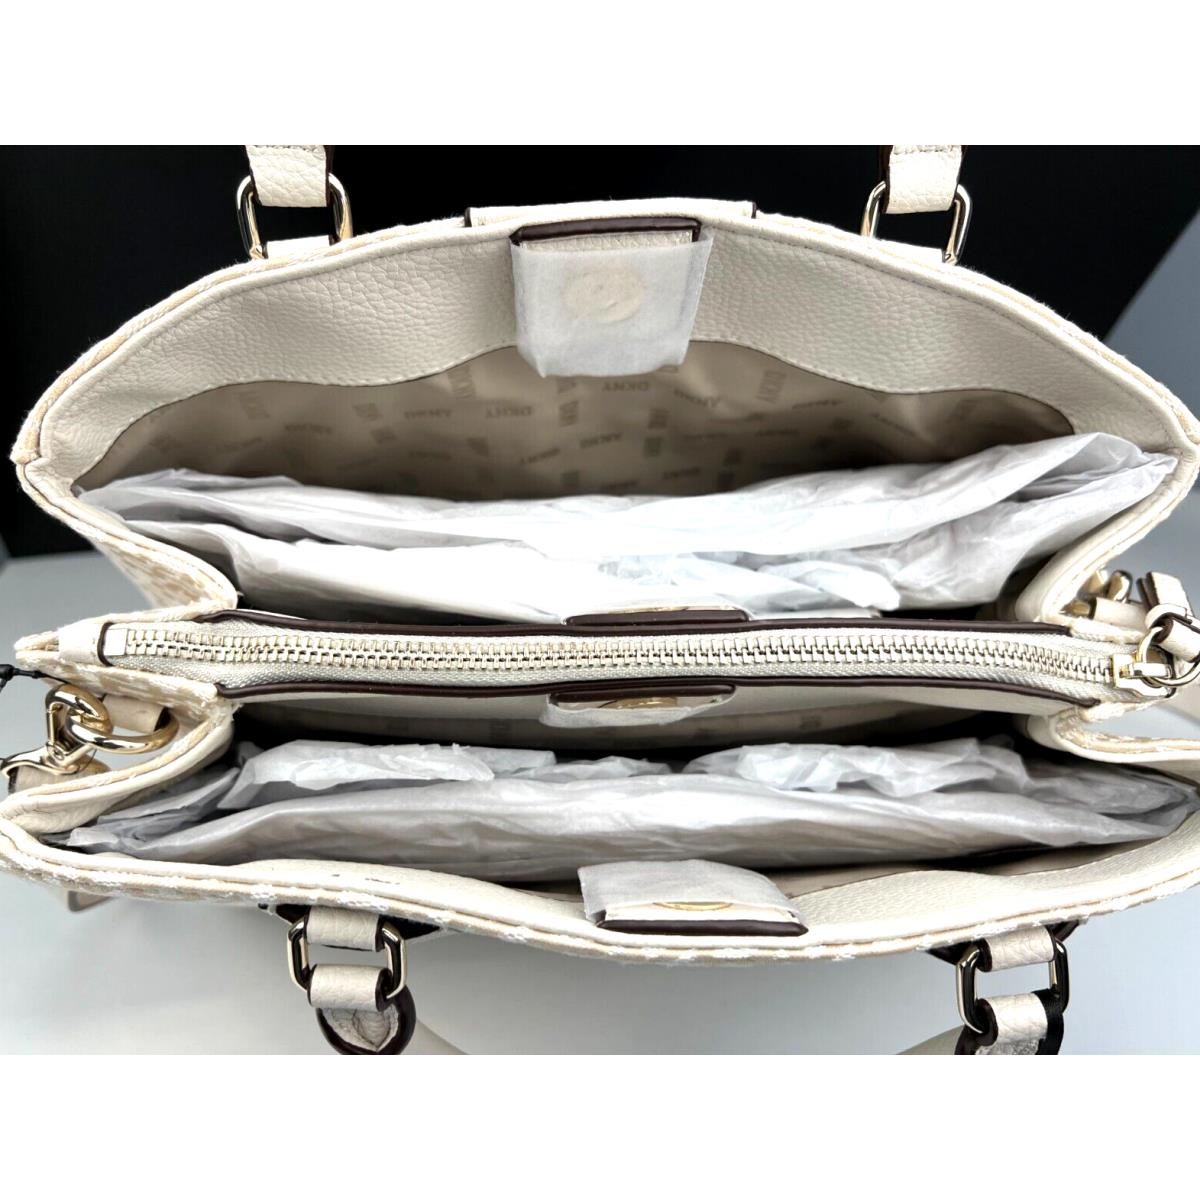 Dkny Noho Logo Large Triple Compart Satchel Handbag Ivory White W/beige - DKNY  bag 